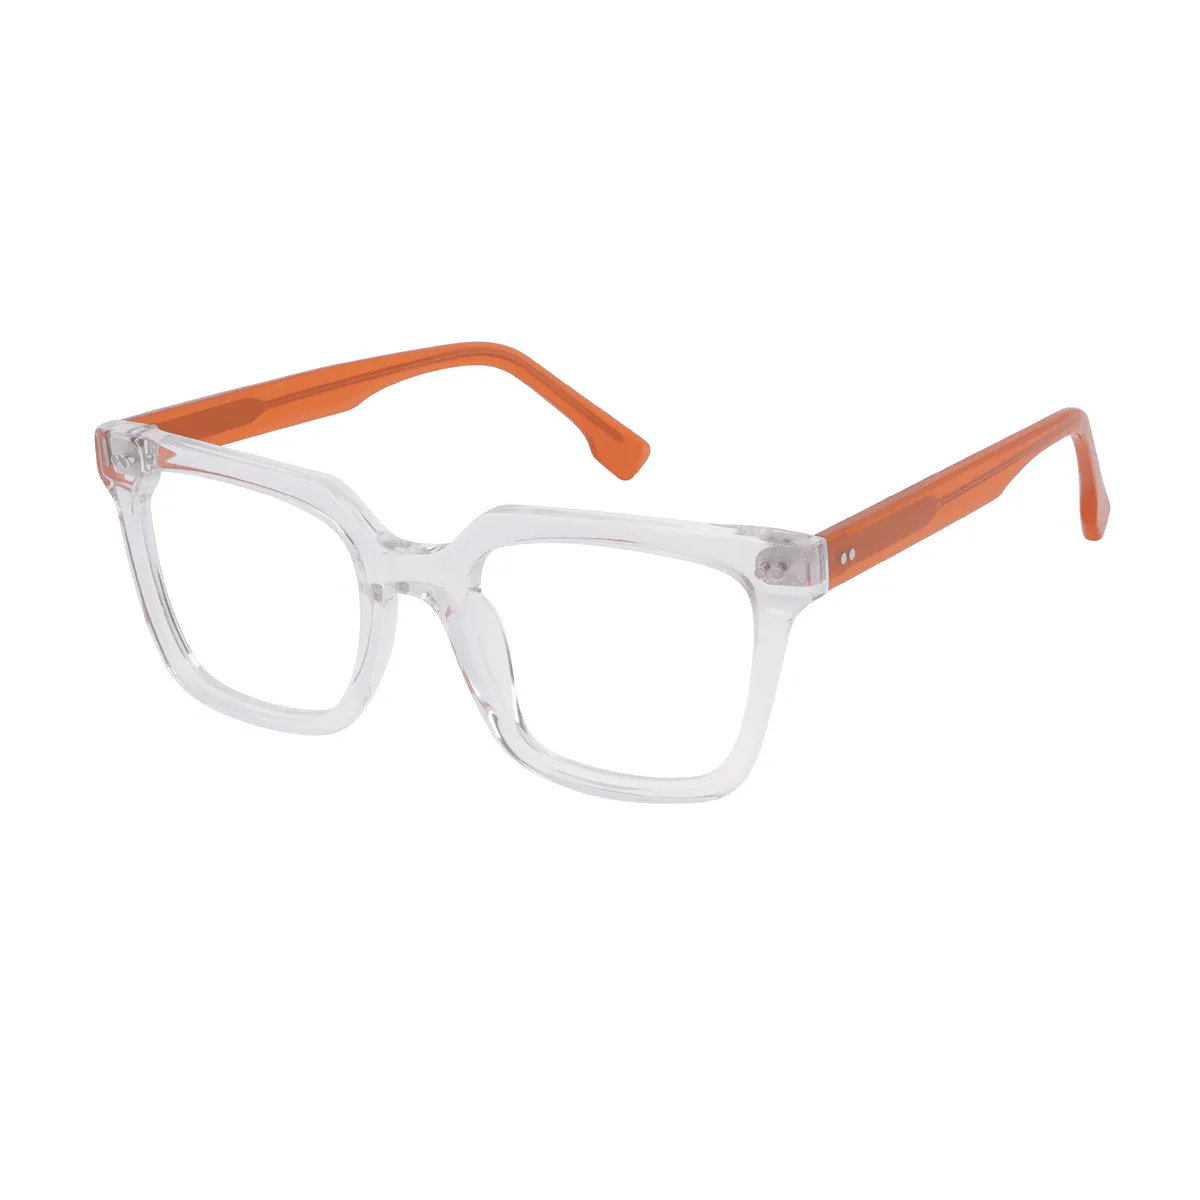 Fashion Square Green-Brown Eyeglasses for Women & Men